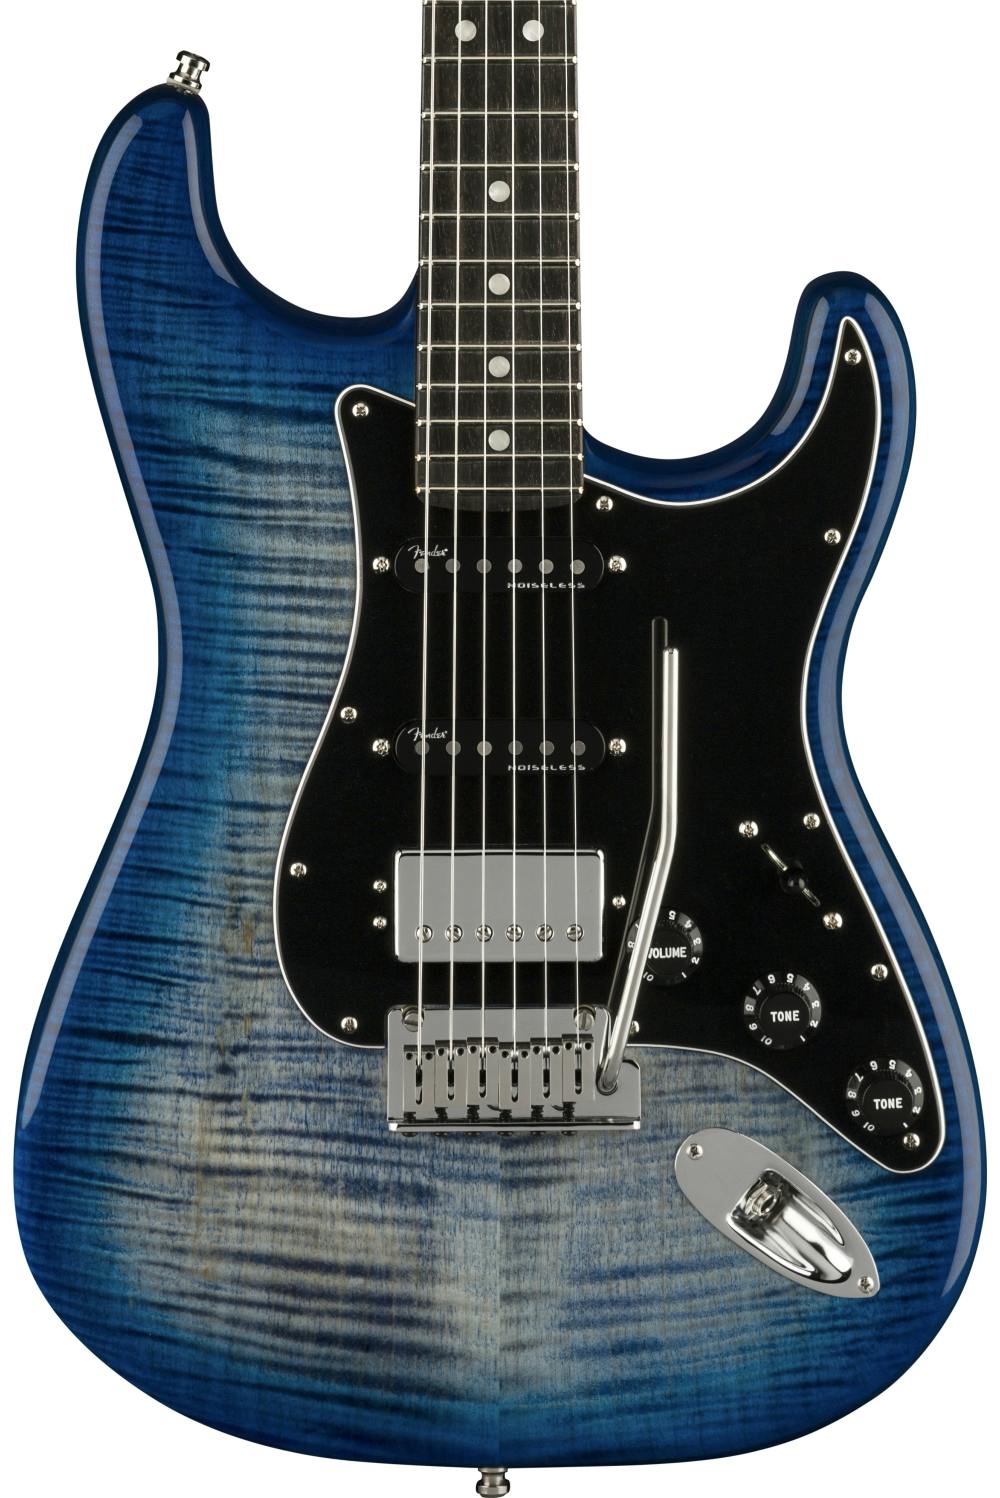 Fender stratocaster hss ebony fingerboard limited-edition